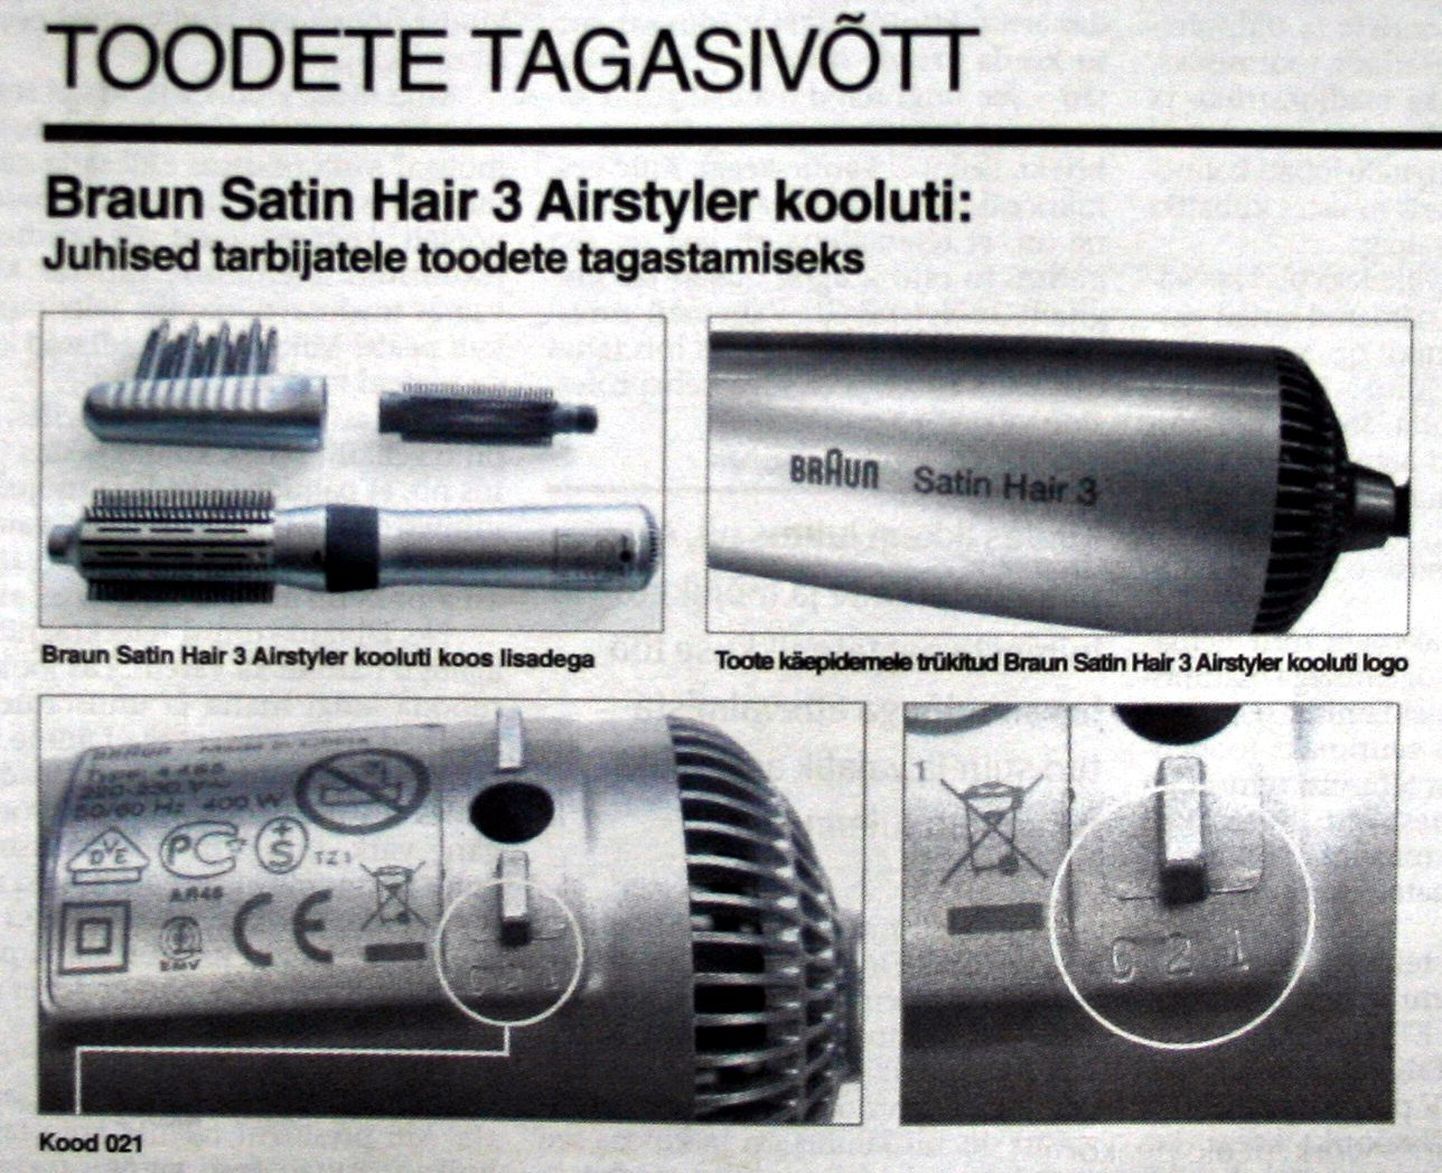 Braun Satin Hair 3 Airstyle с производственным кодом 021.